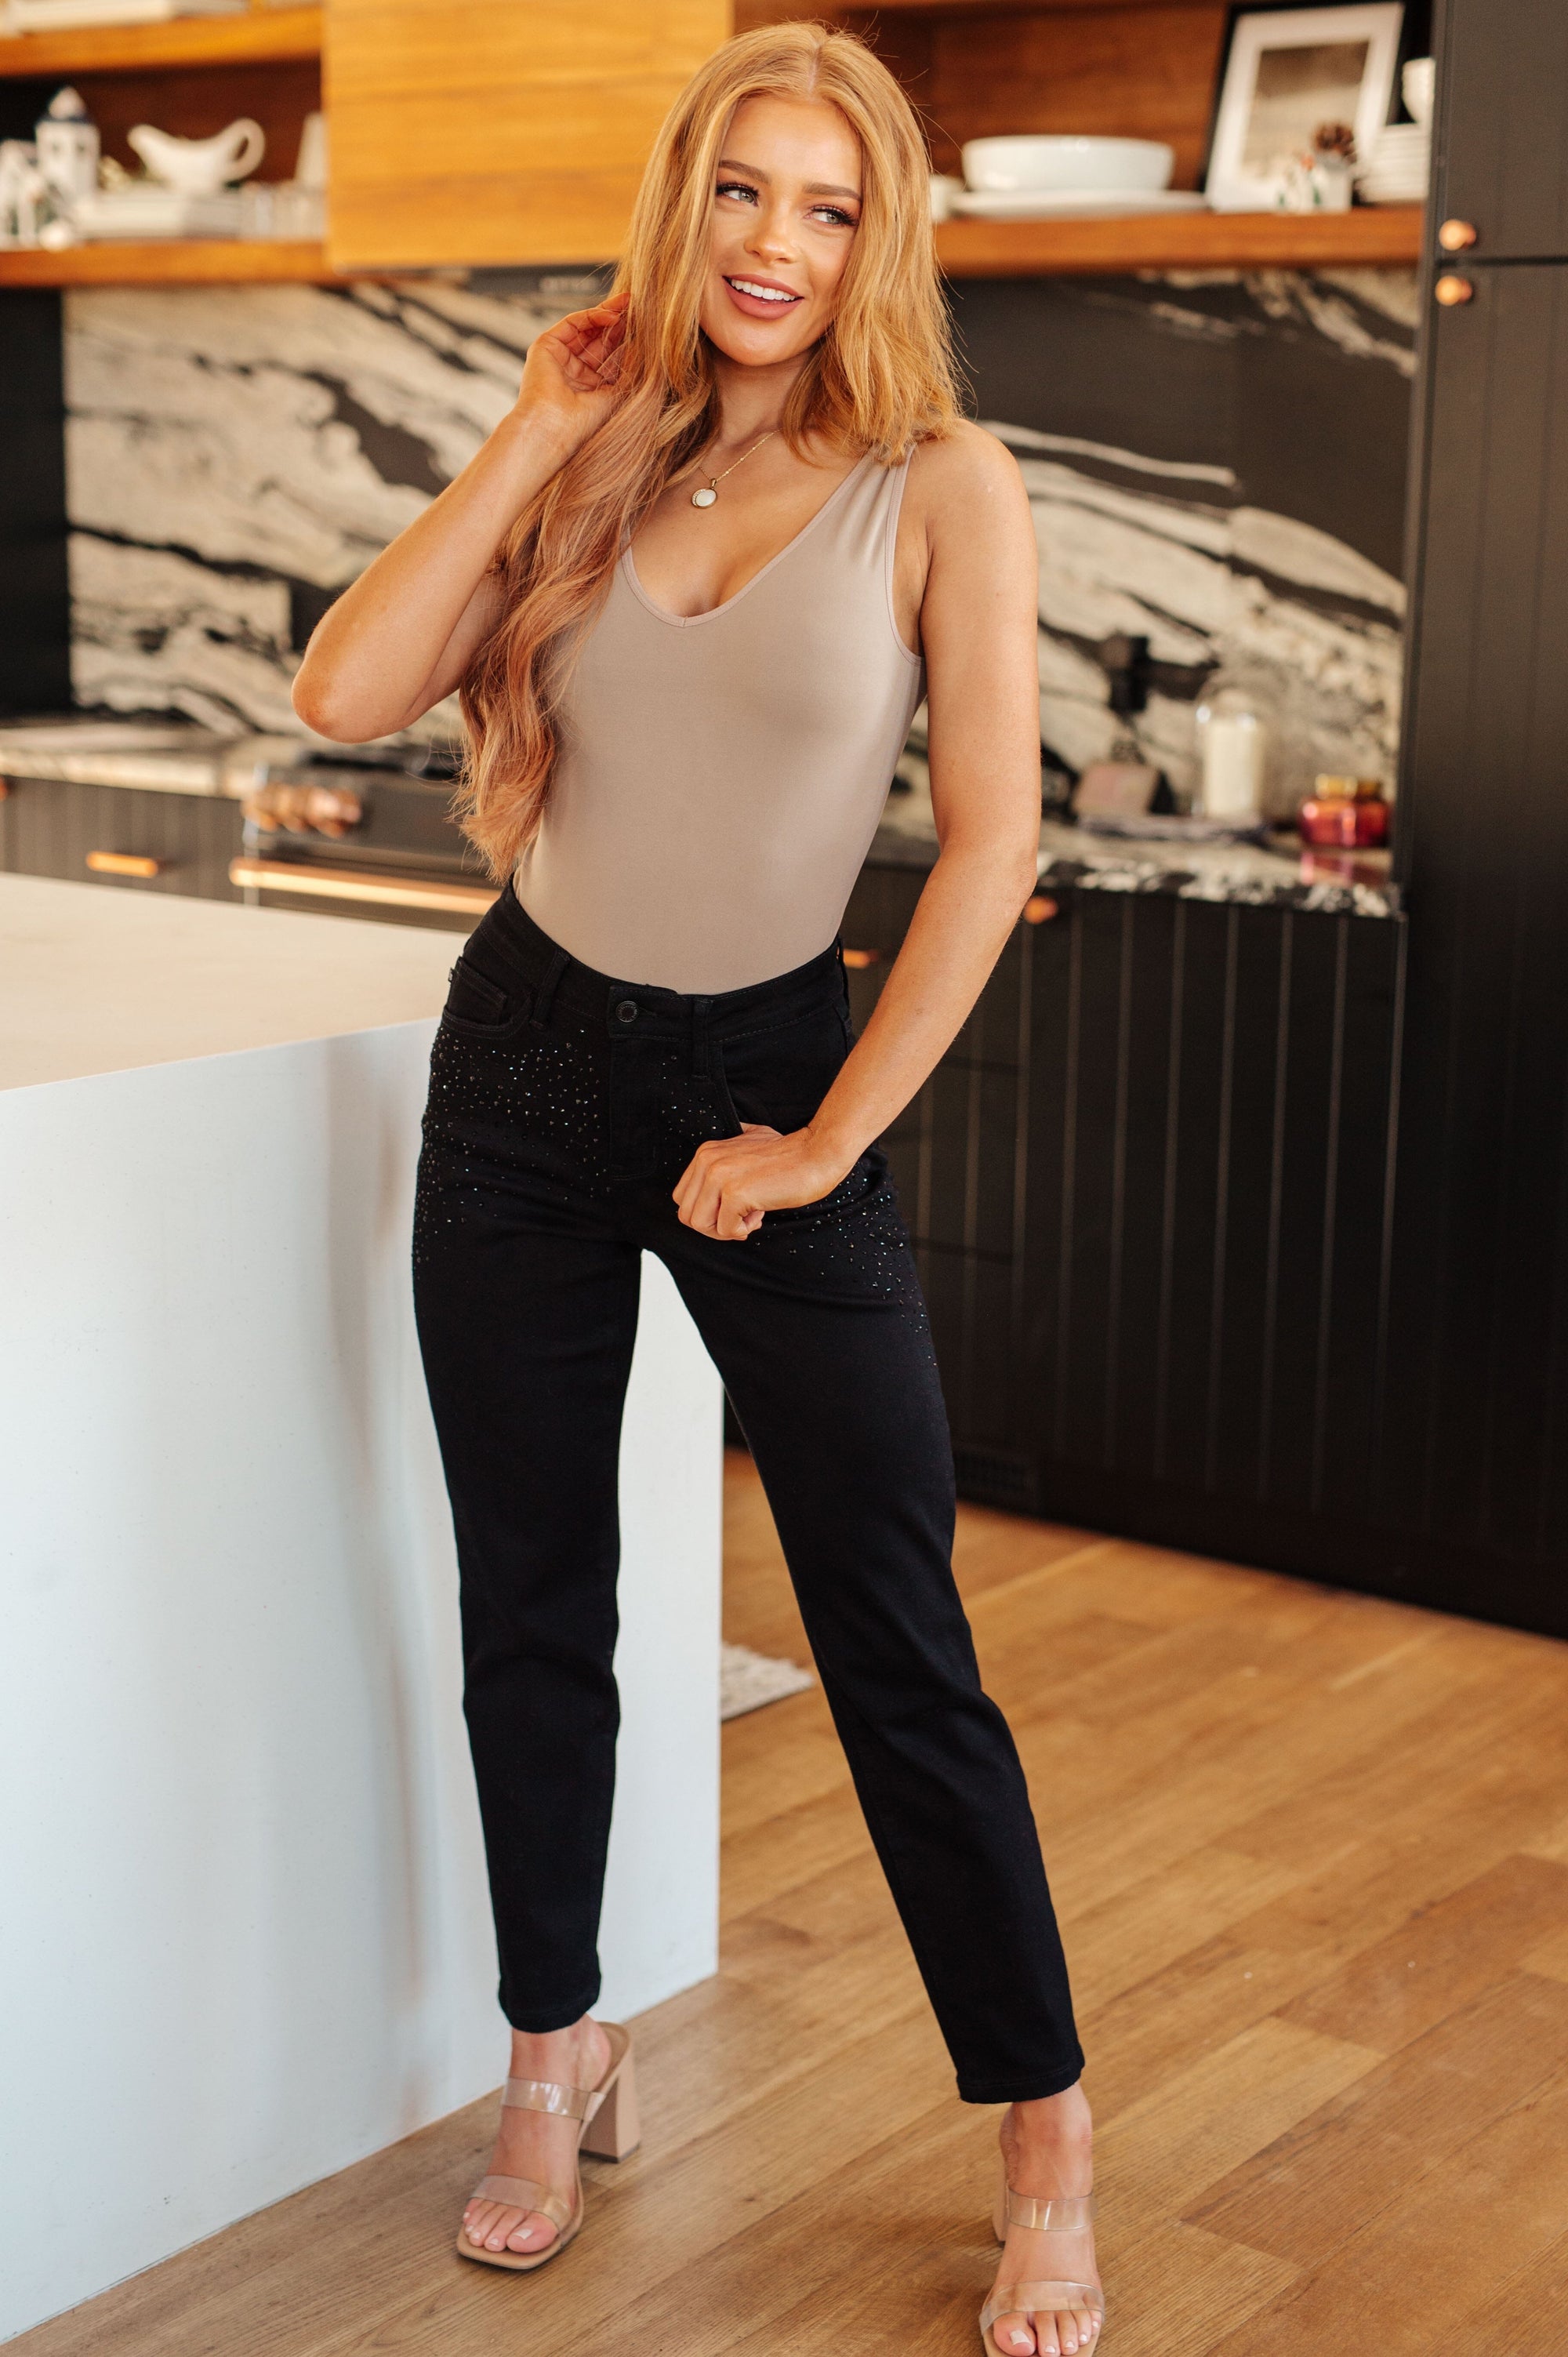 Reese Rhinestone Slim Fit Jeans in Black Womens Ave Shops 